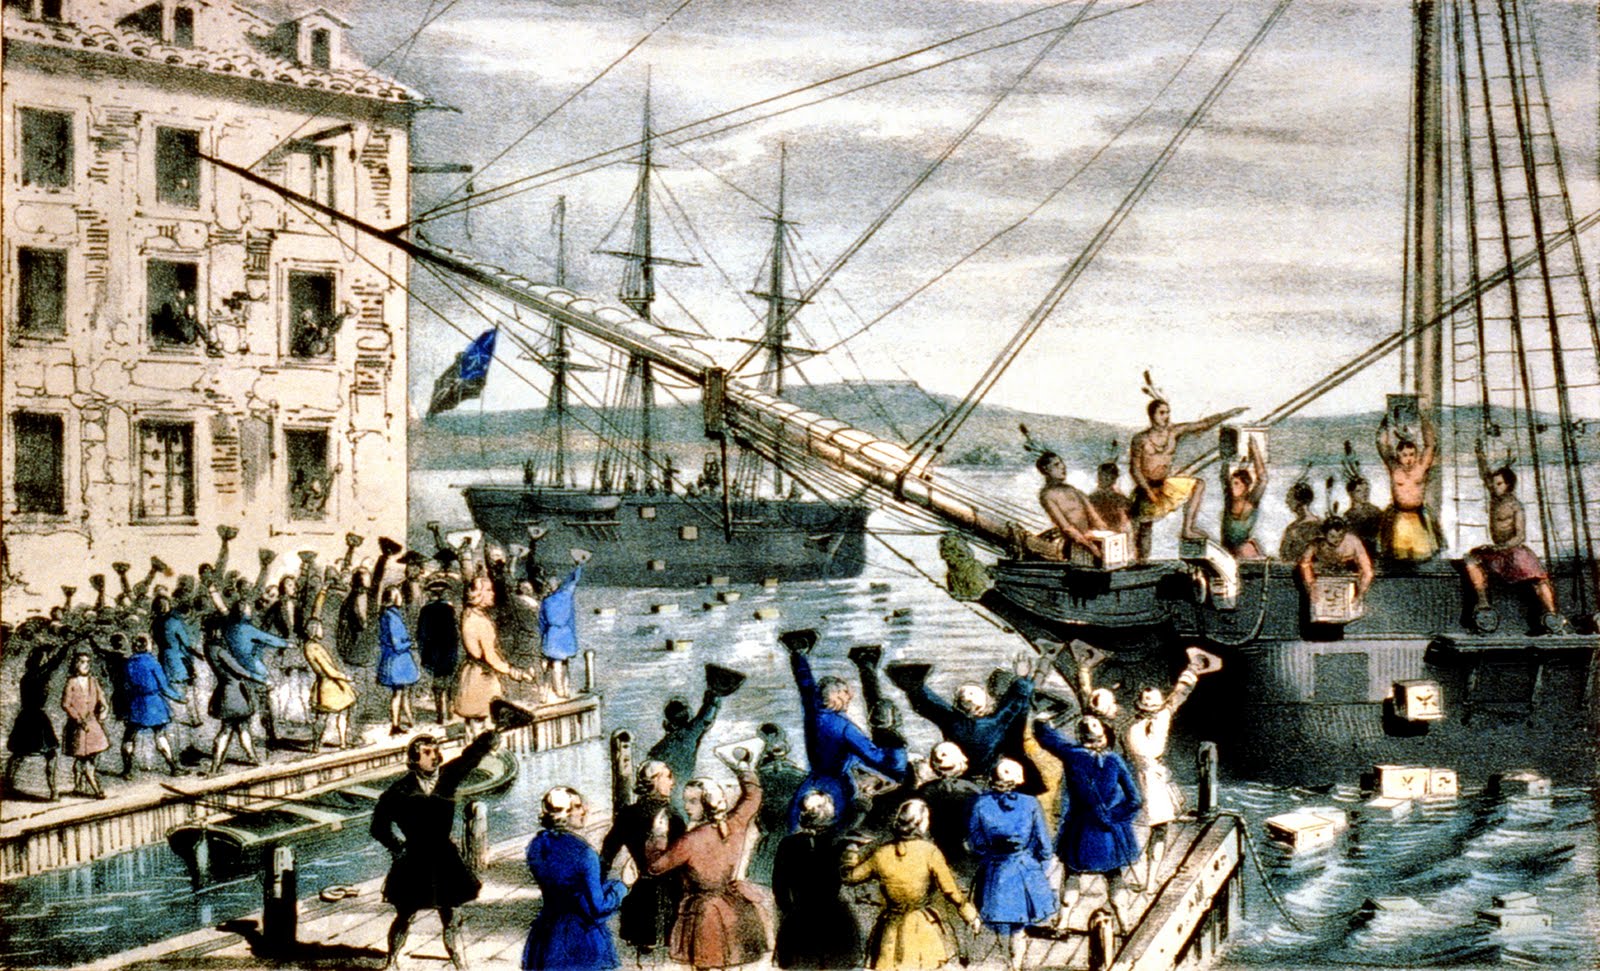     Images  The Destruction Of Tea At Boston Harbor The Boston Tea Party